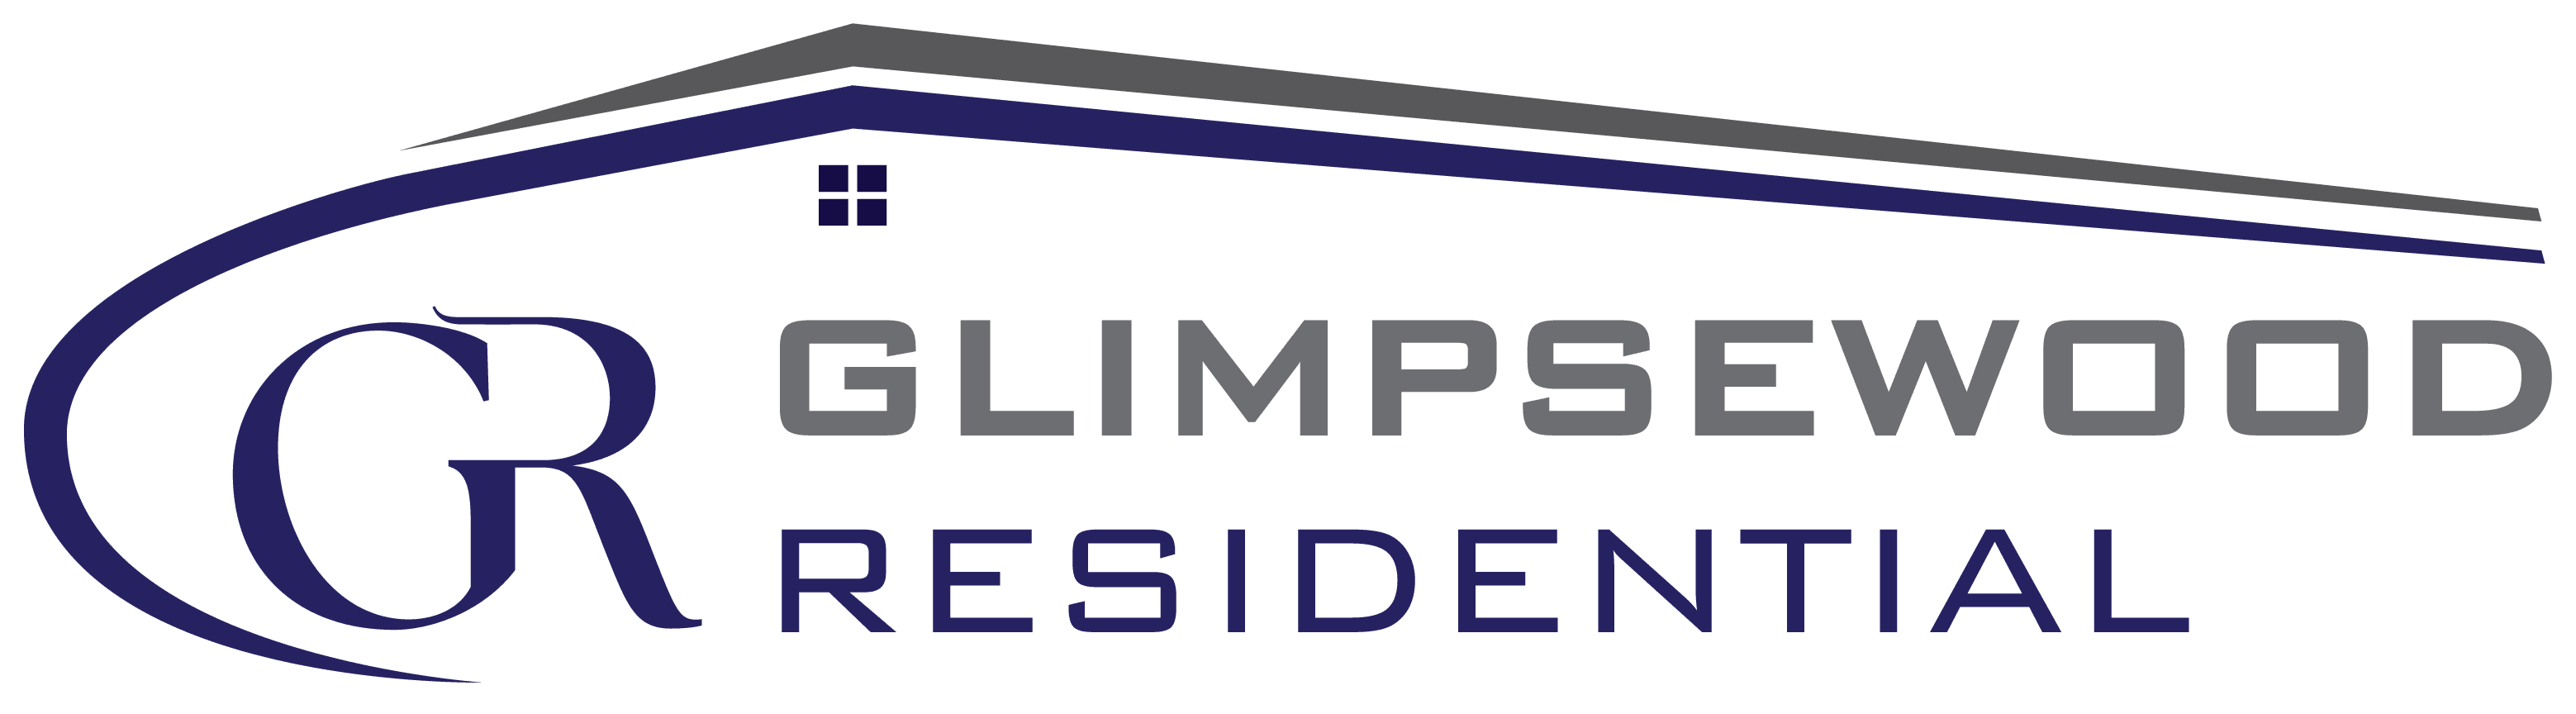 Glimpsewood Residential Logo